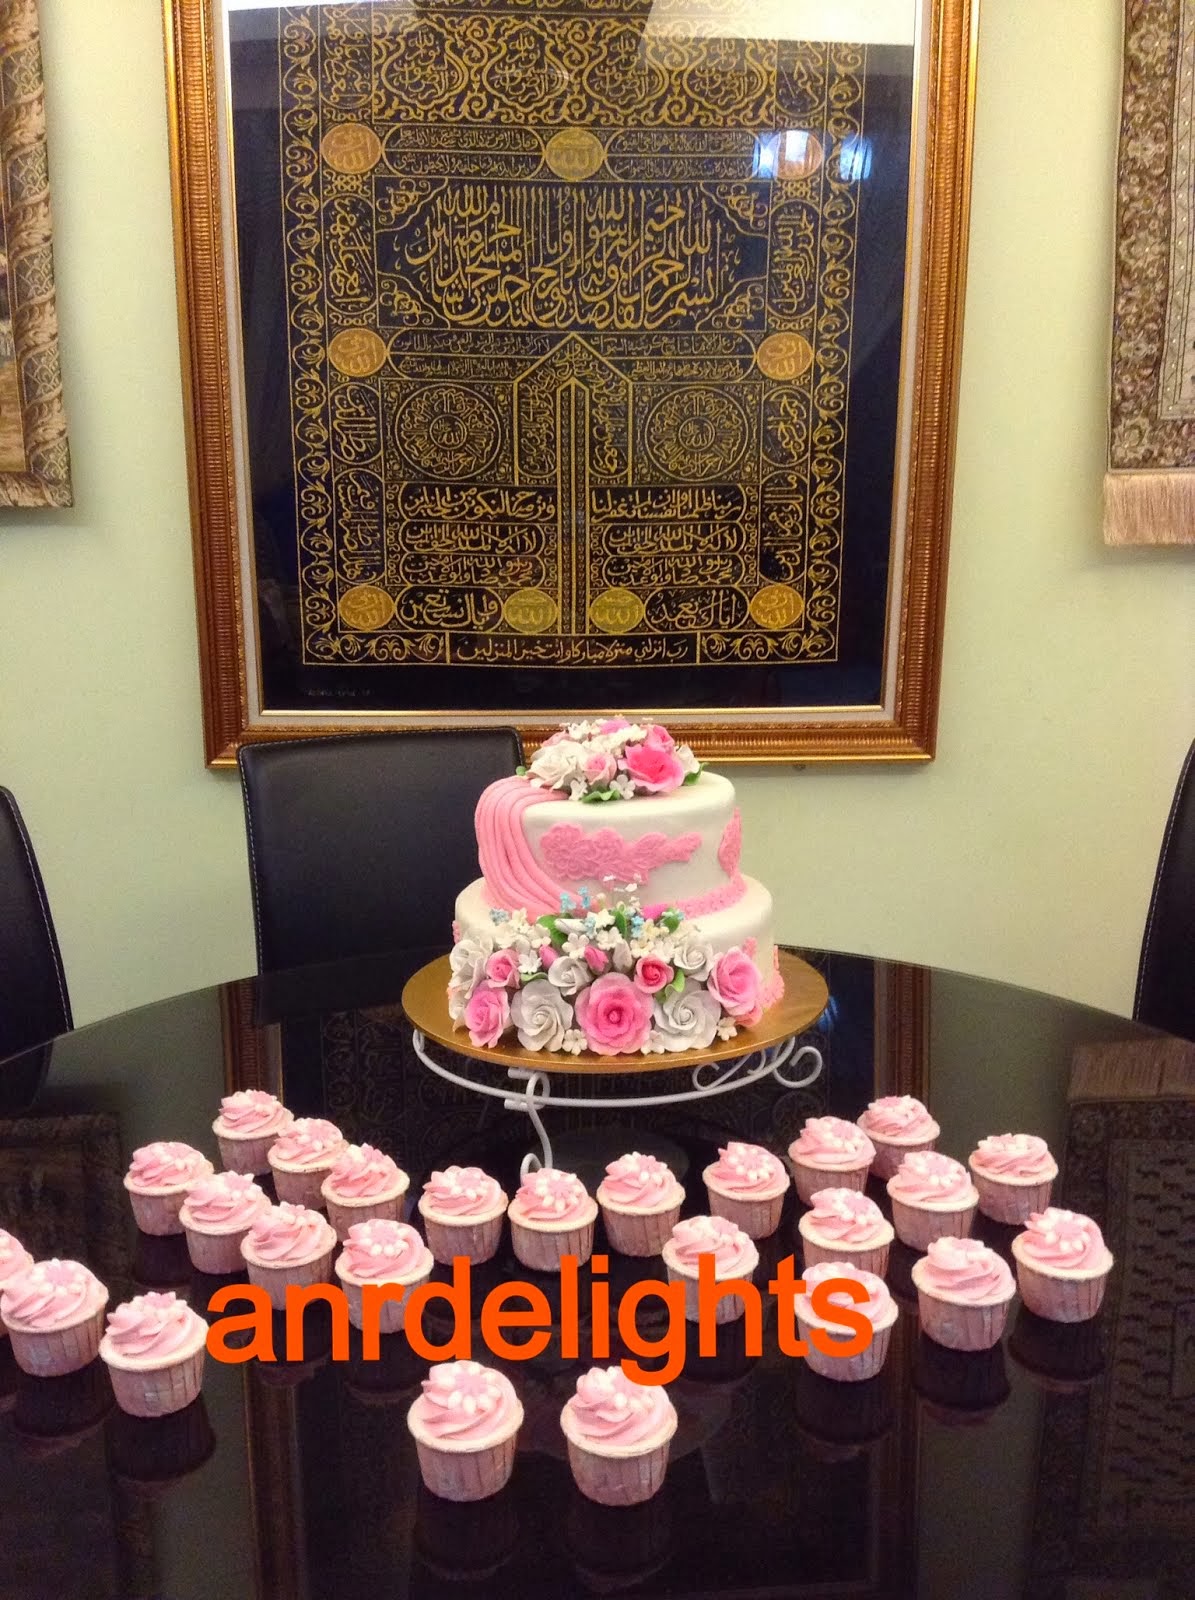 WEDDING CAKE